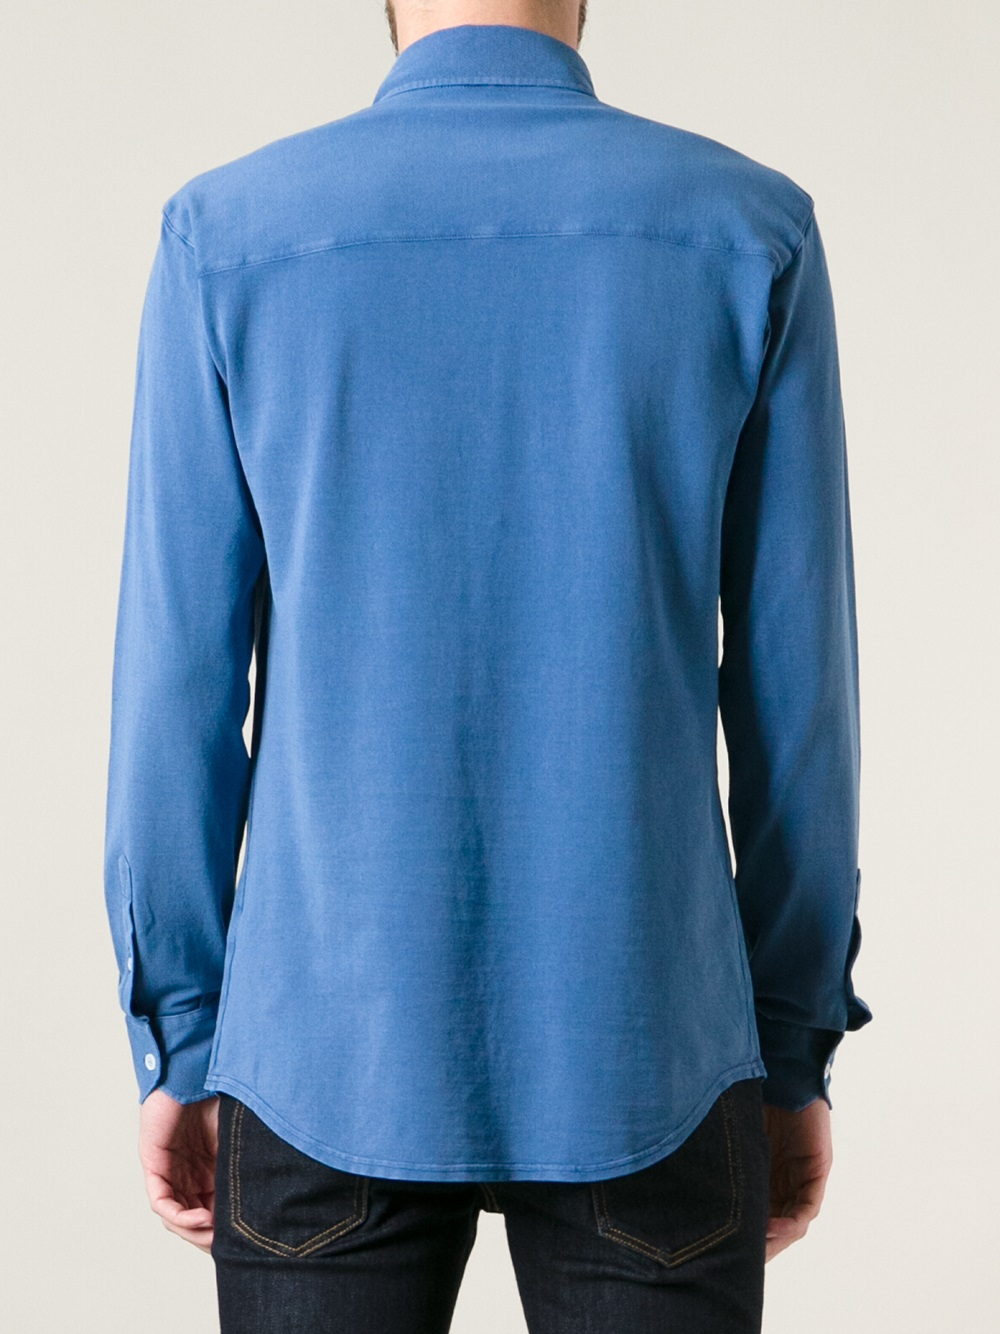 Lyst - Fedeli Long Sleeve Polo Shirt in Blue for Men